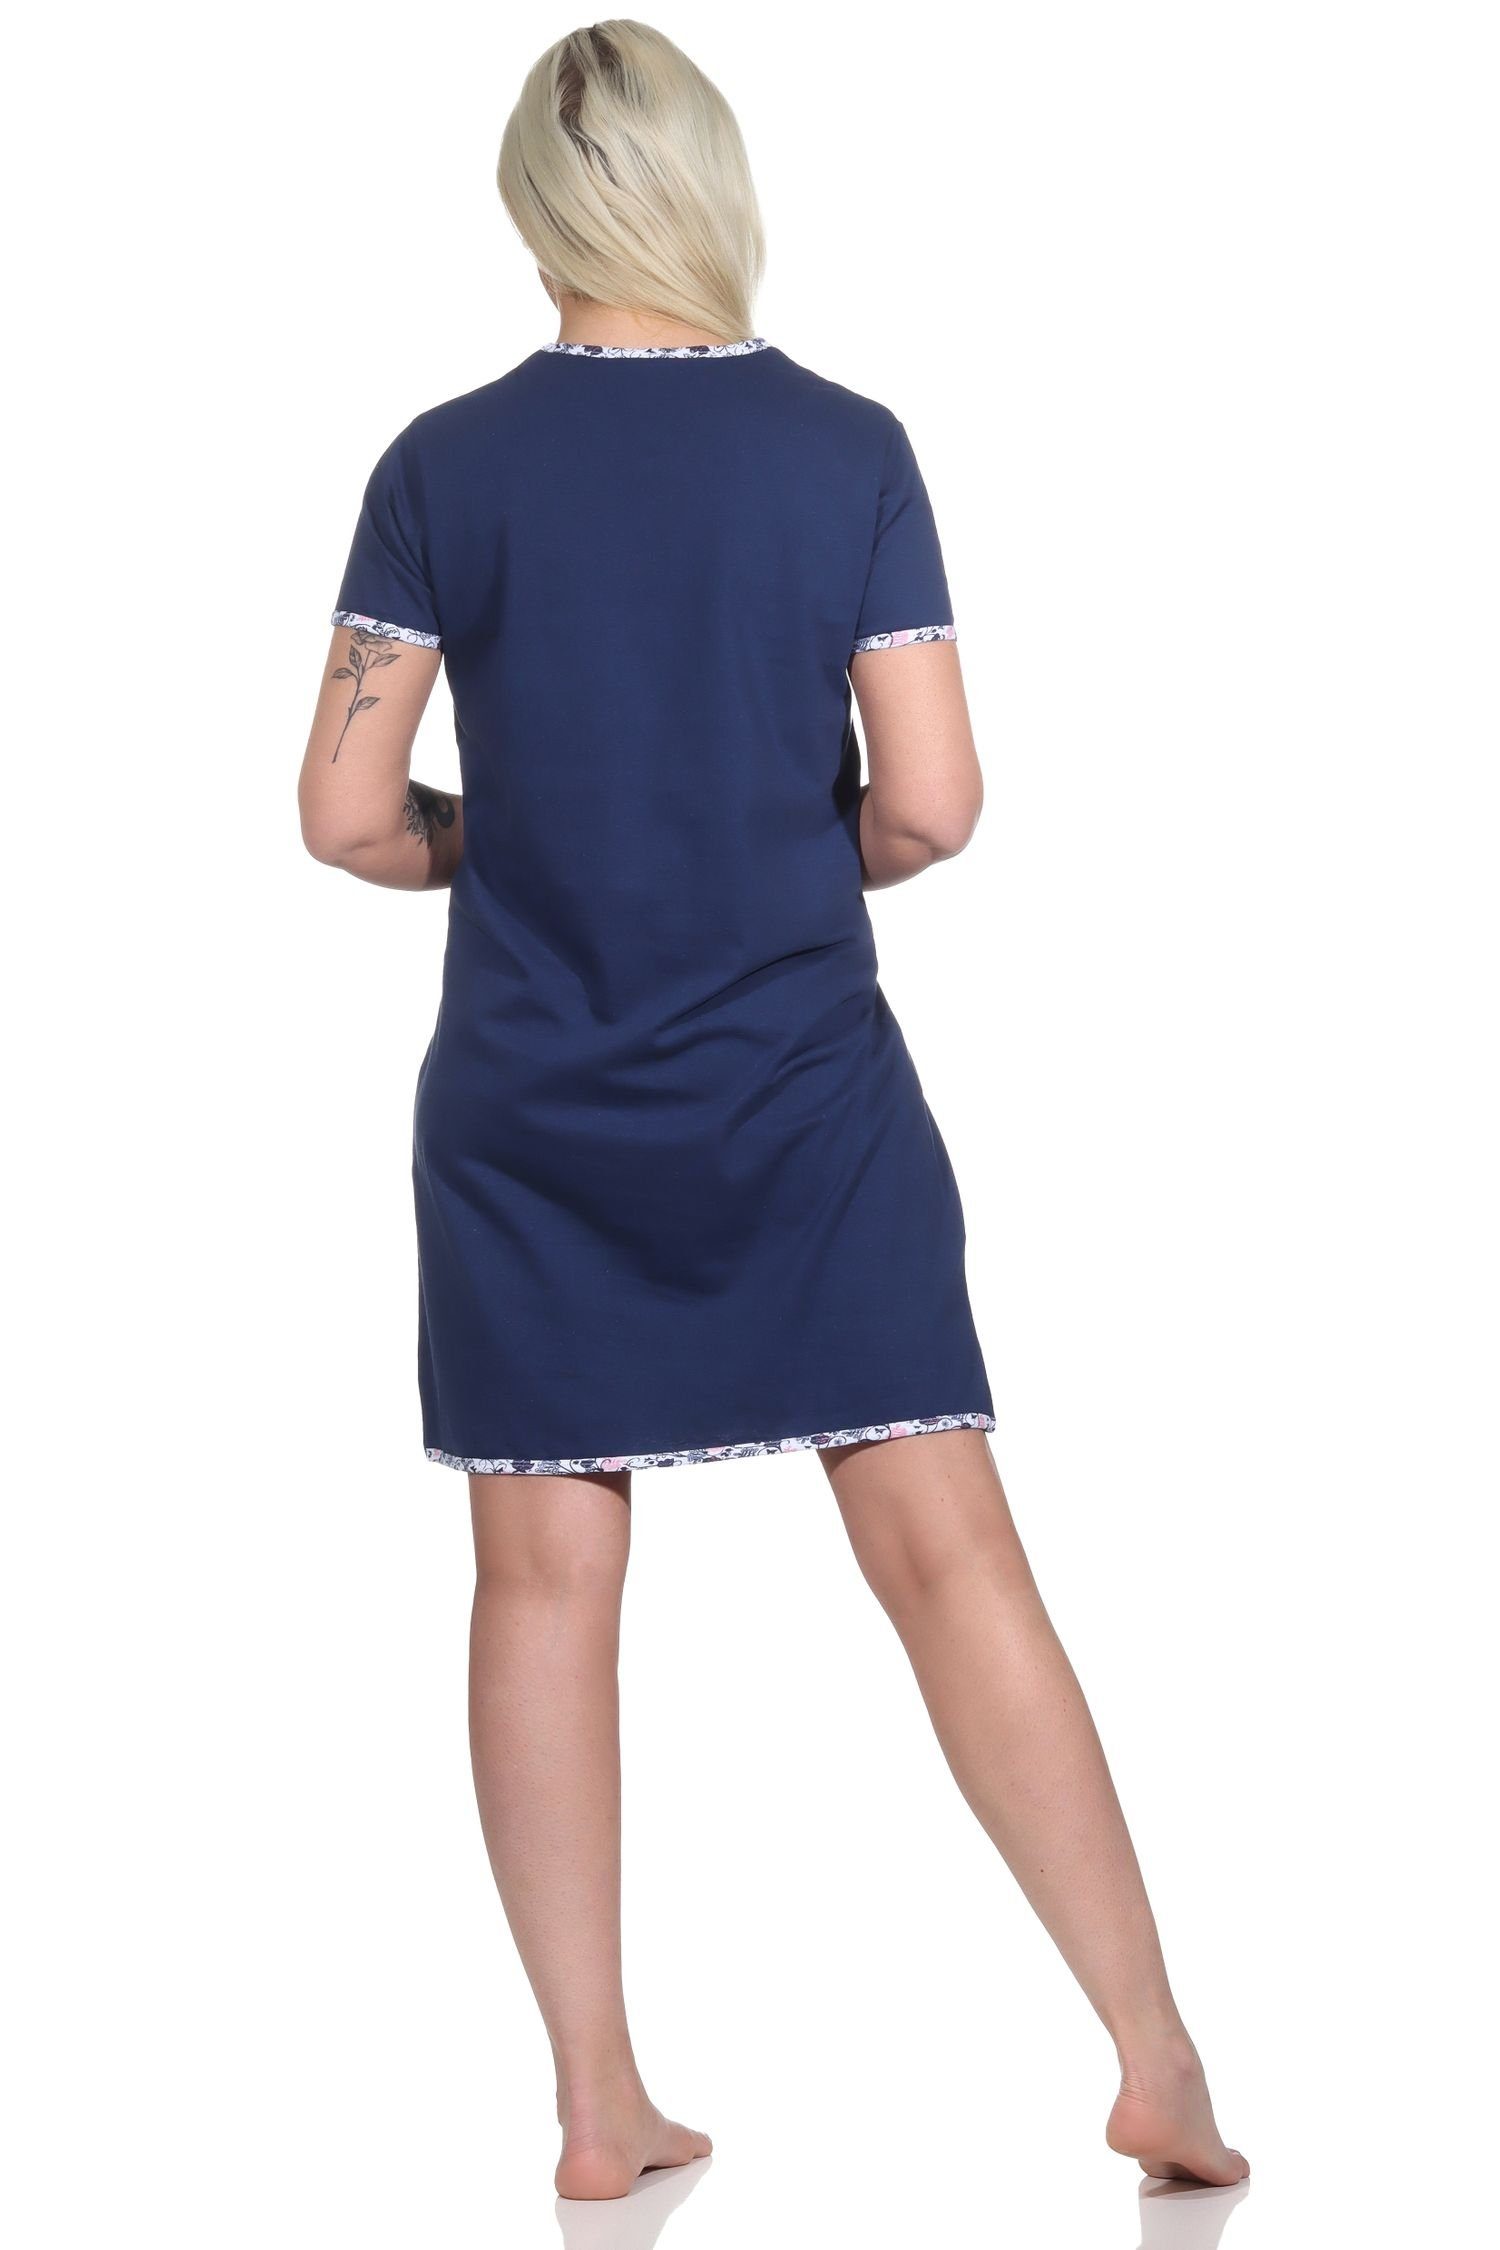 RELAX by Normann Nachthemd Florales Damen mit kurzes Bigshirt V-Ausschnitt, Nachthemd marine